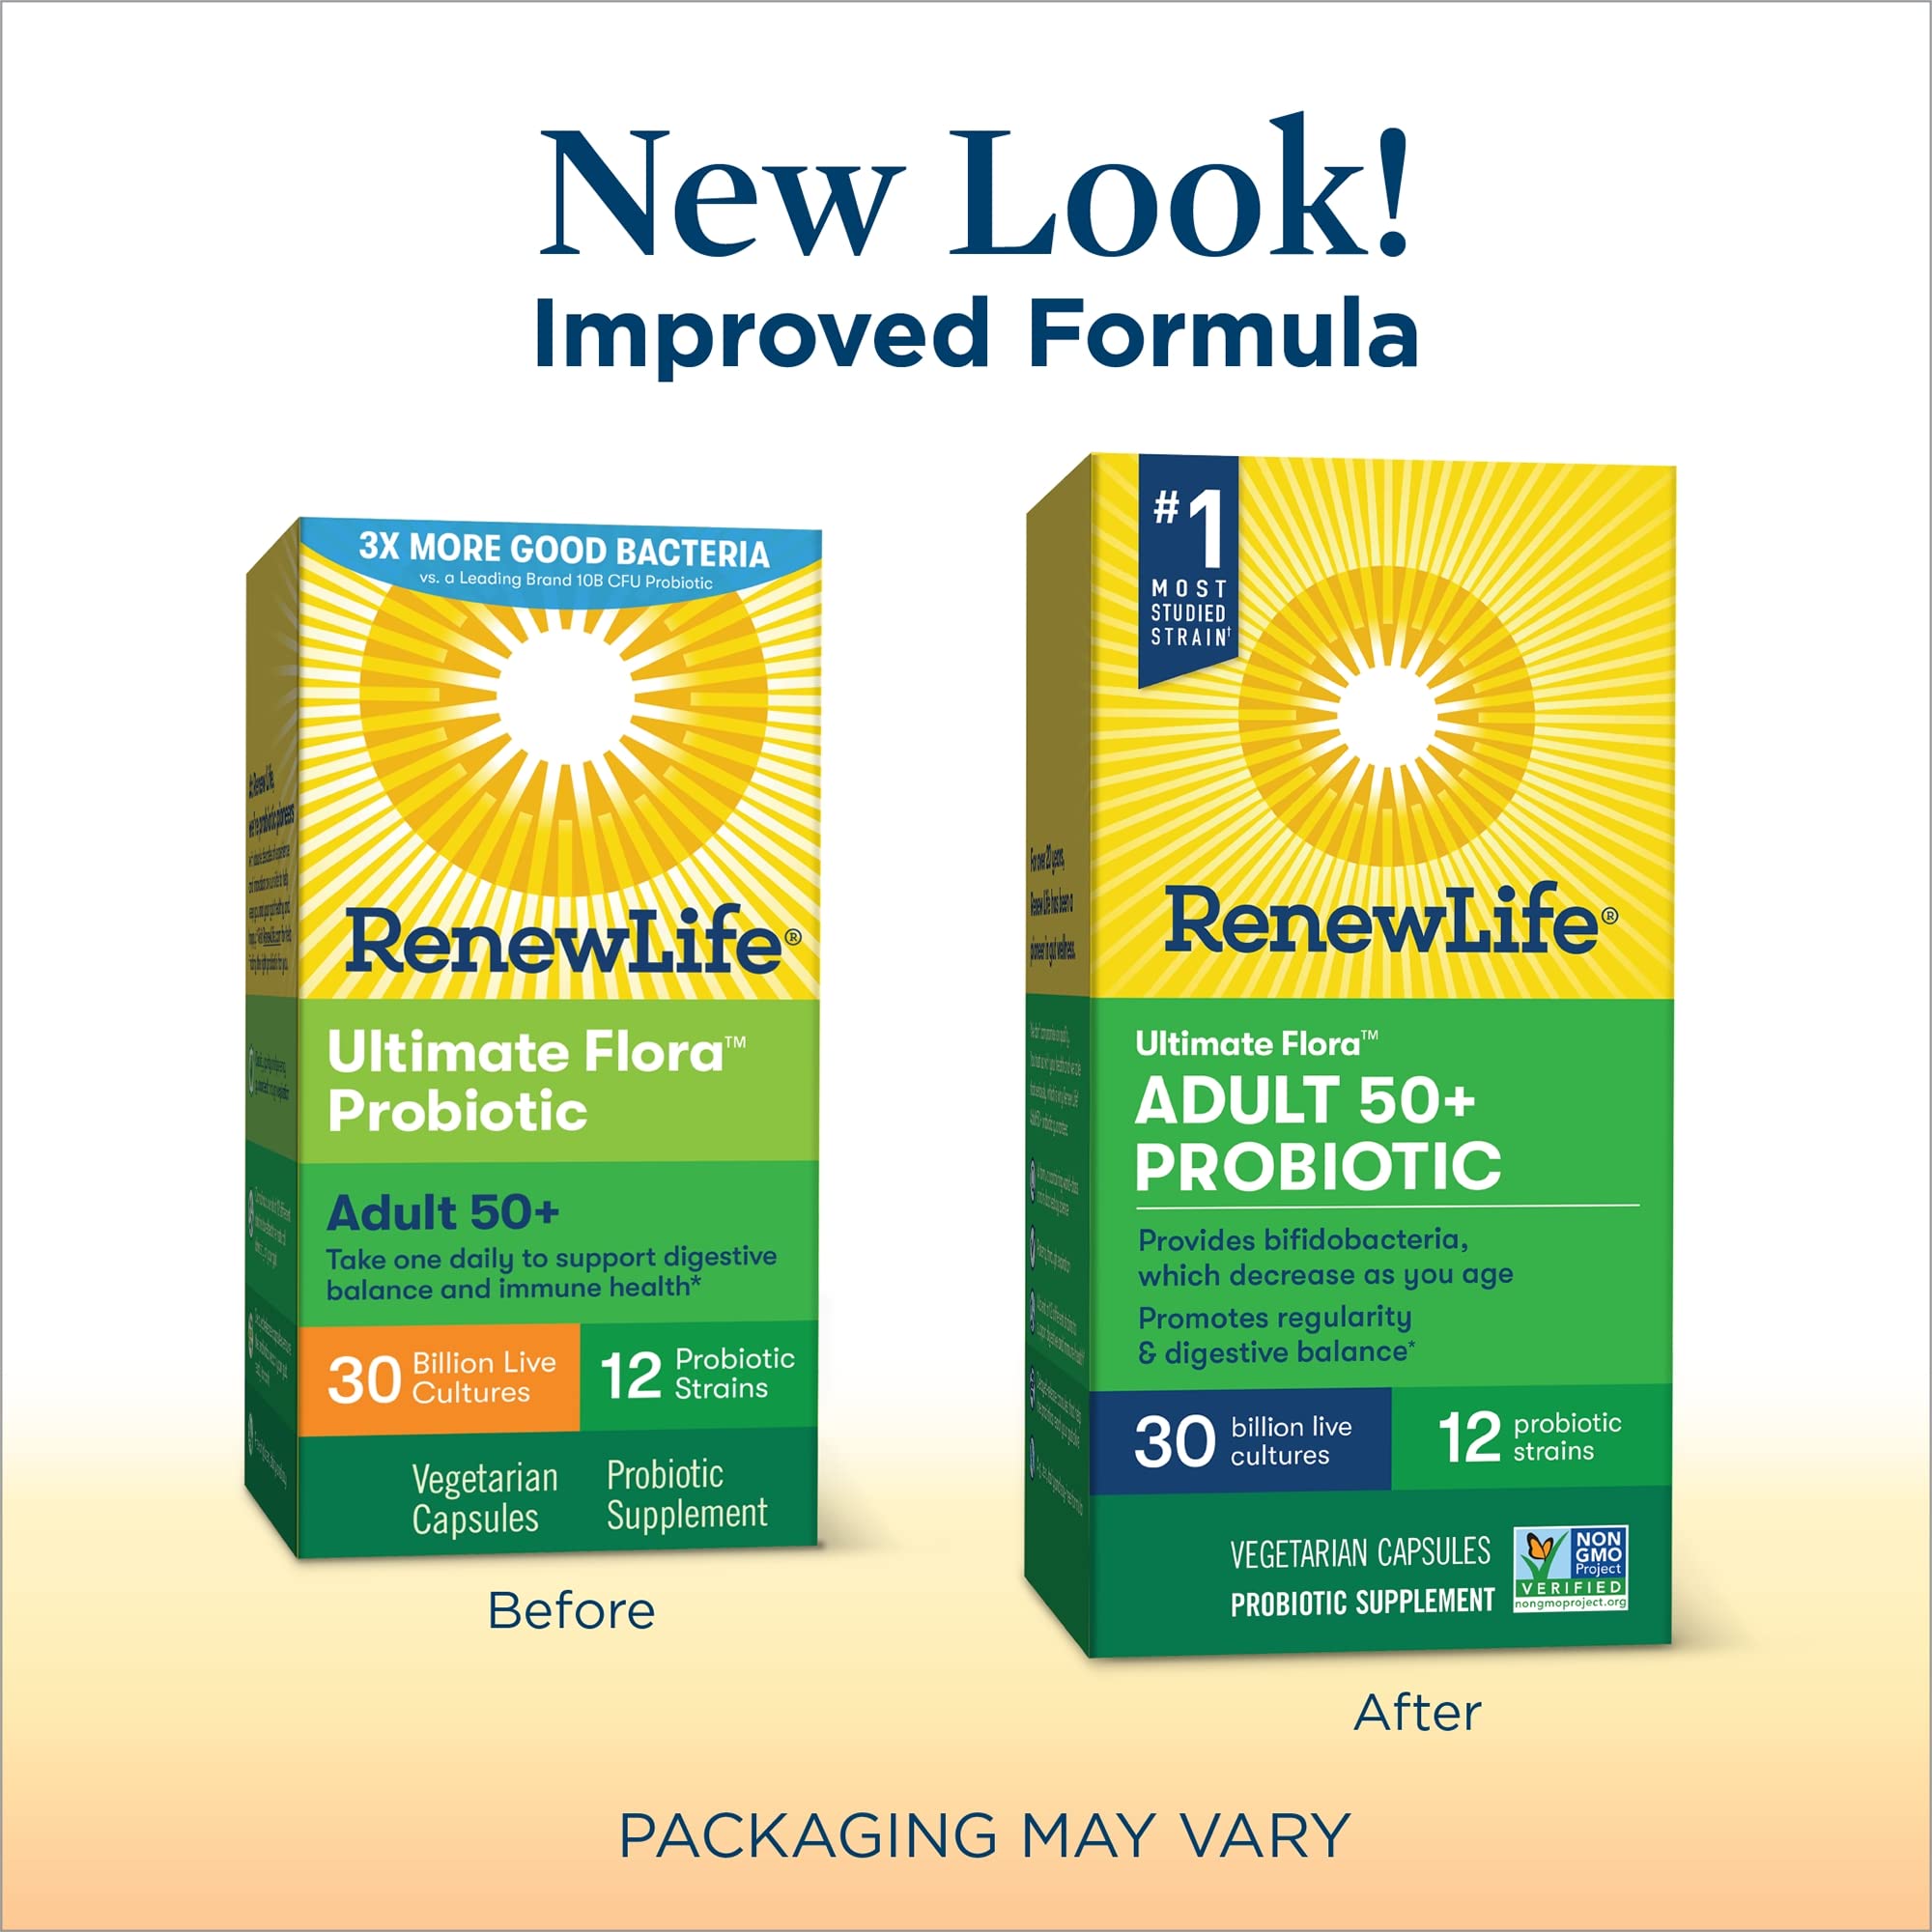 Renew Life Adult Probiotics 50+, 30 Billion CFU Guaranteed, Probiotic Supplement for Digestive & Immune Health, Shelf Stable, Gluten Free, Extra Care, For Men & Women, 60 Capsules